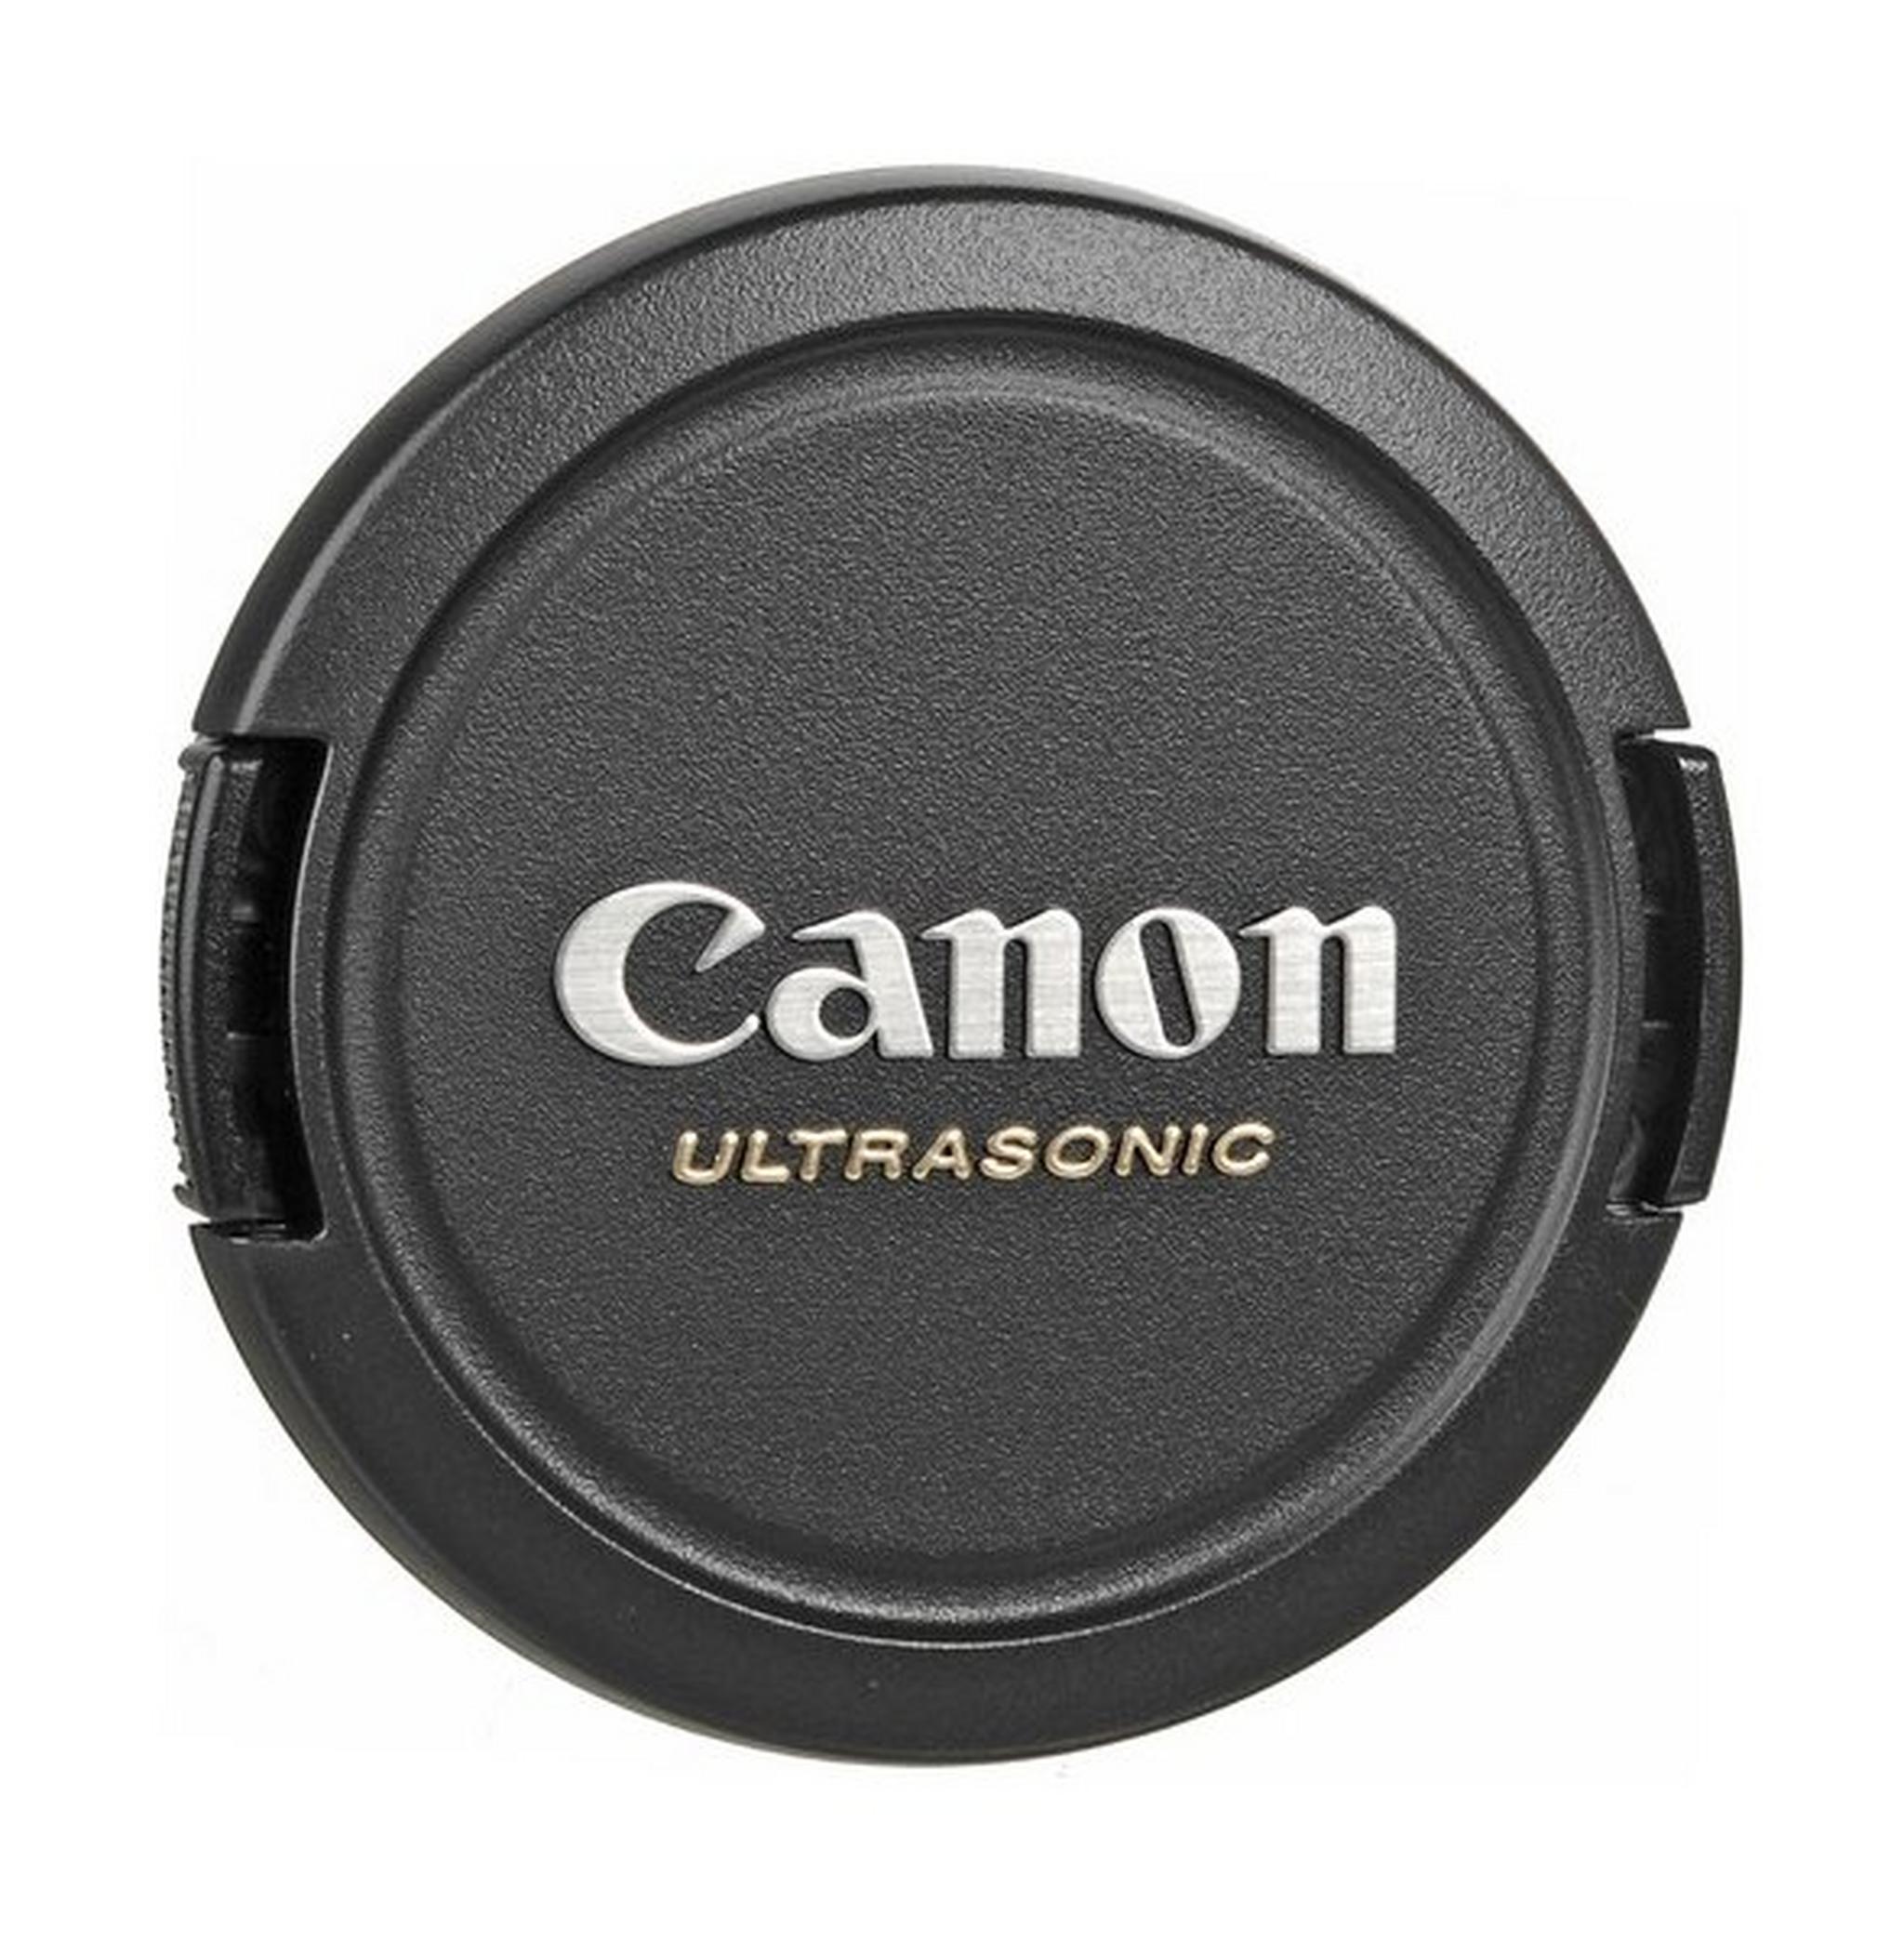 Canon EF-S 60mm f/2.8 Macro USM Lens